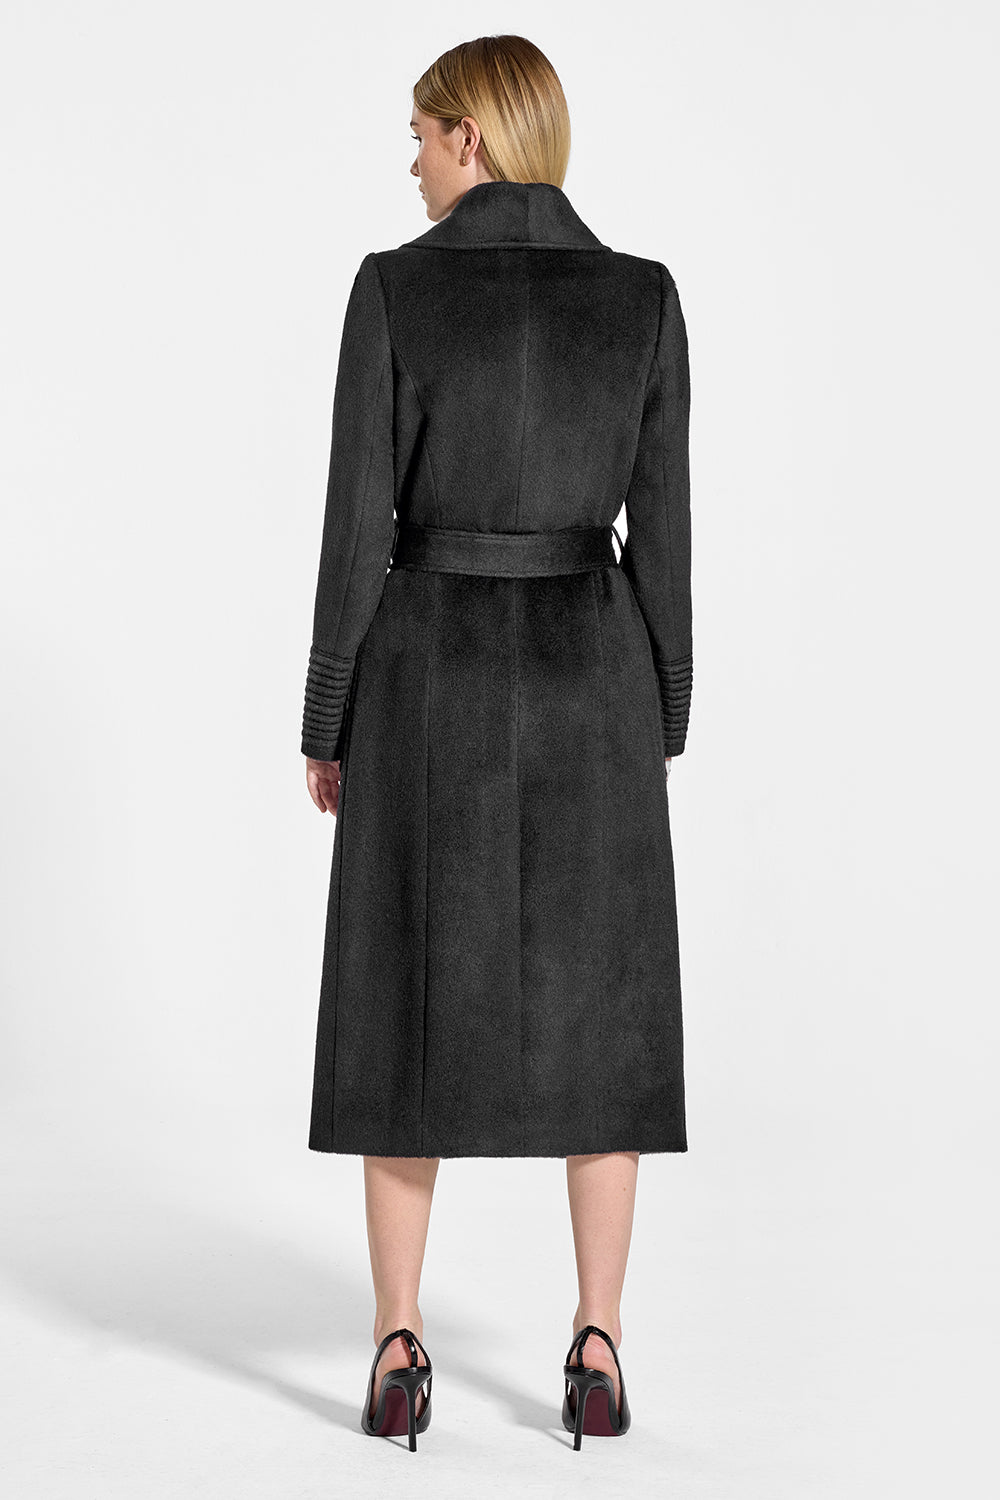 Chic Black Coat - Long Coat - Oversized Coat - Black Felt Coat - Lulus